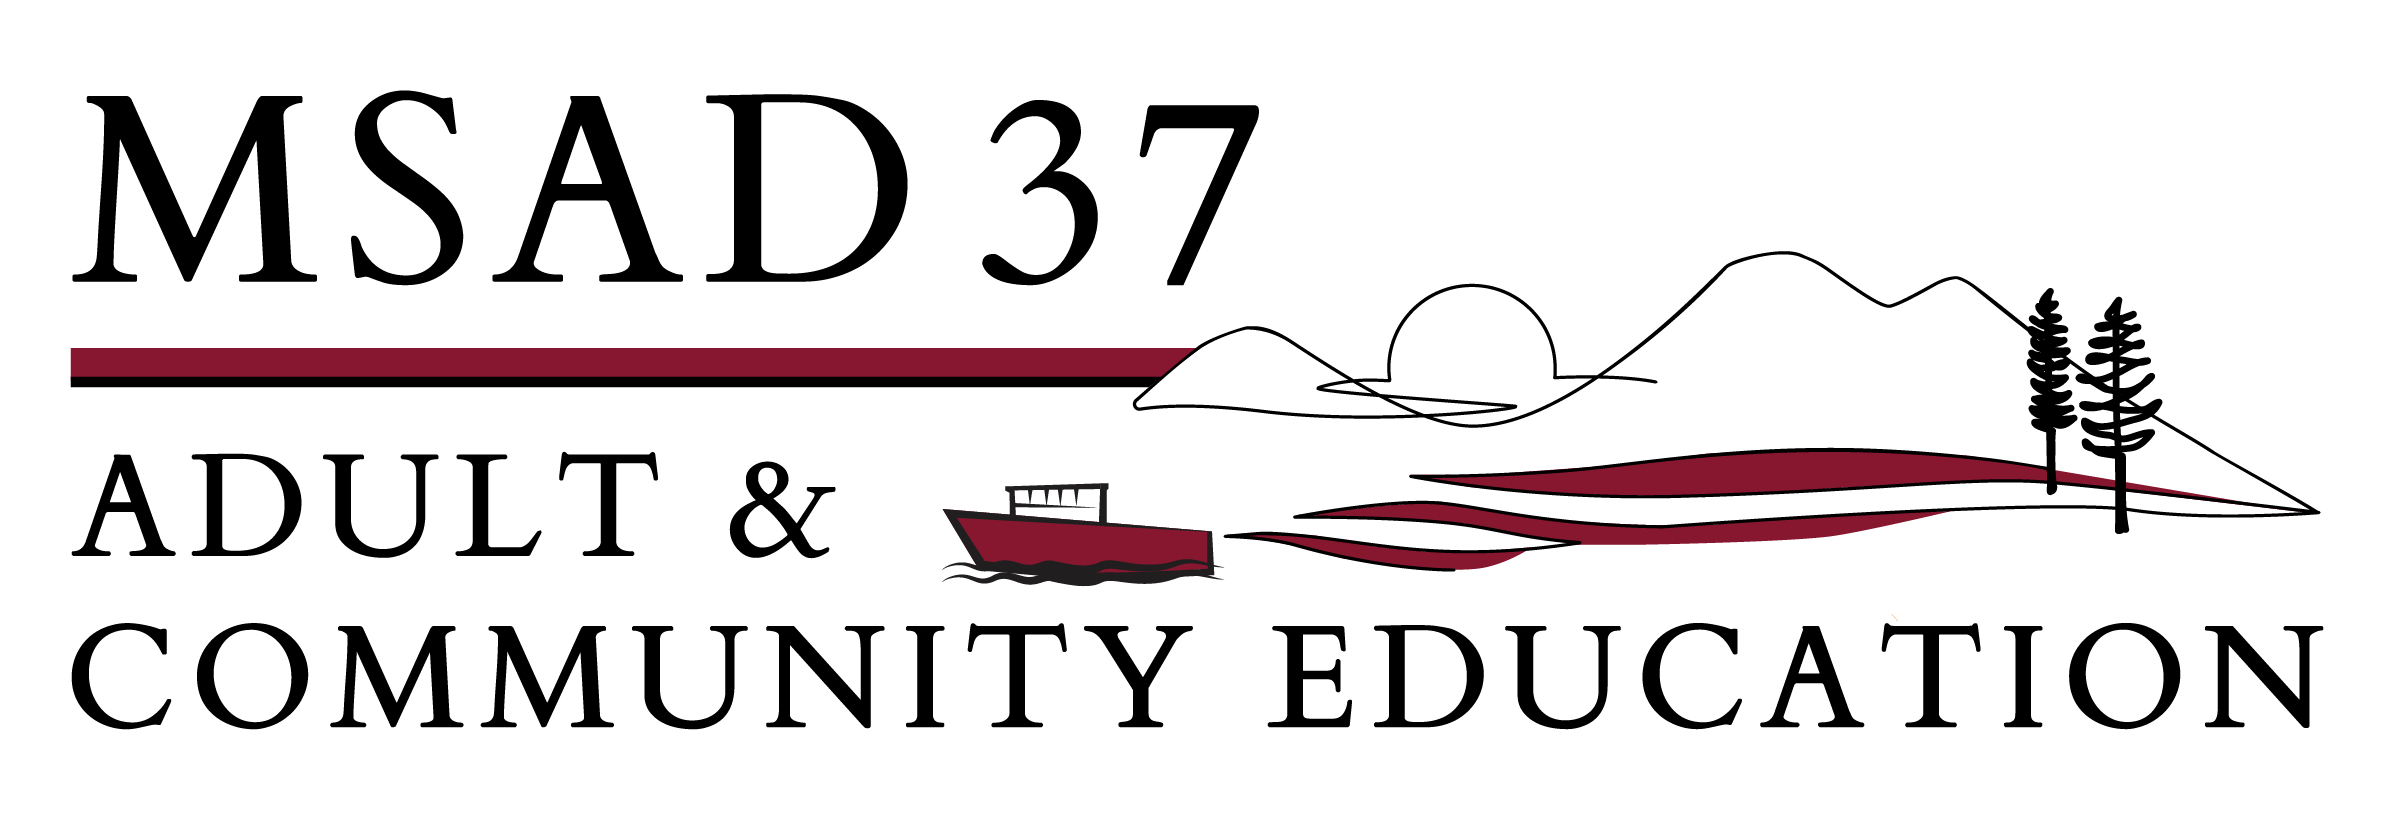 new adult ed logo